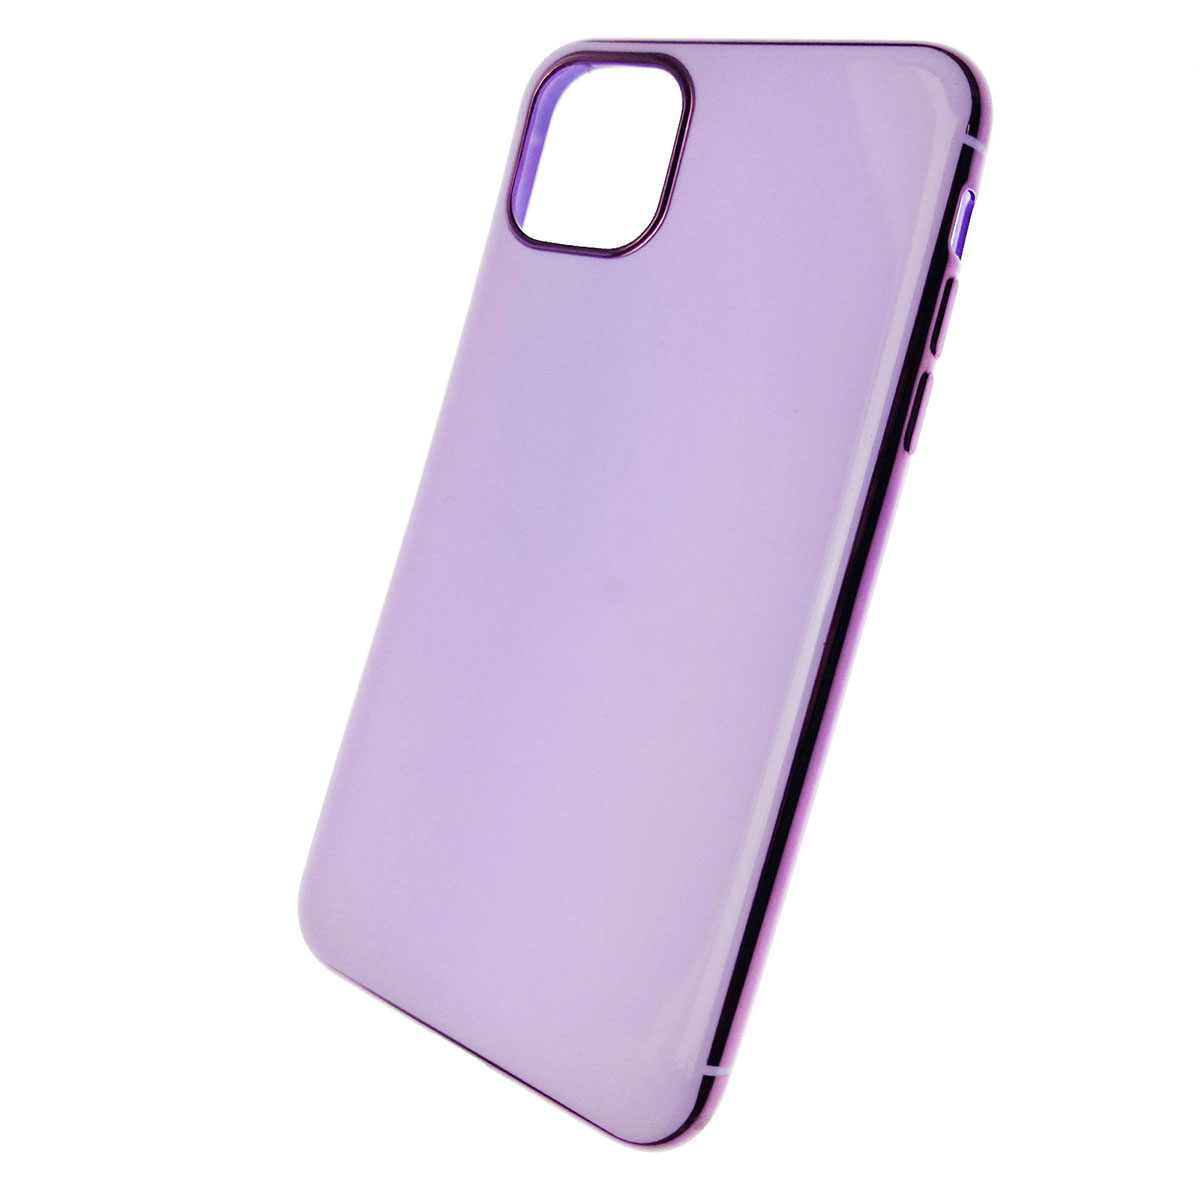 Чехол накладка для APPLE iPhone 11 Pro MAX 2019, силикон, глянец, цвет сиреневый.